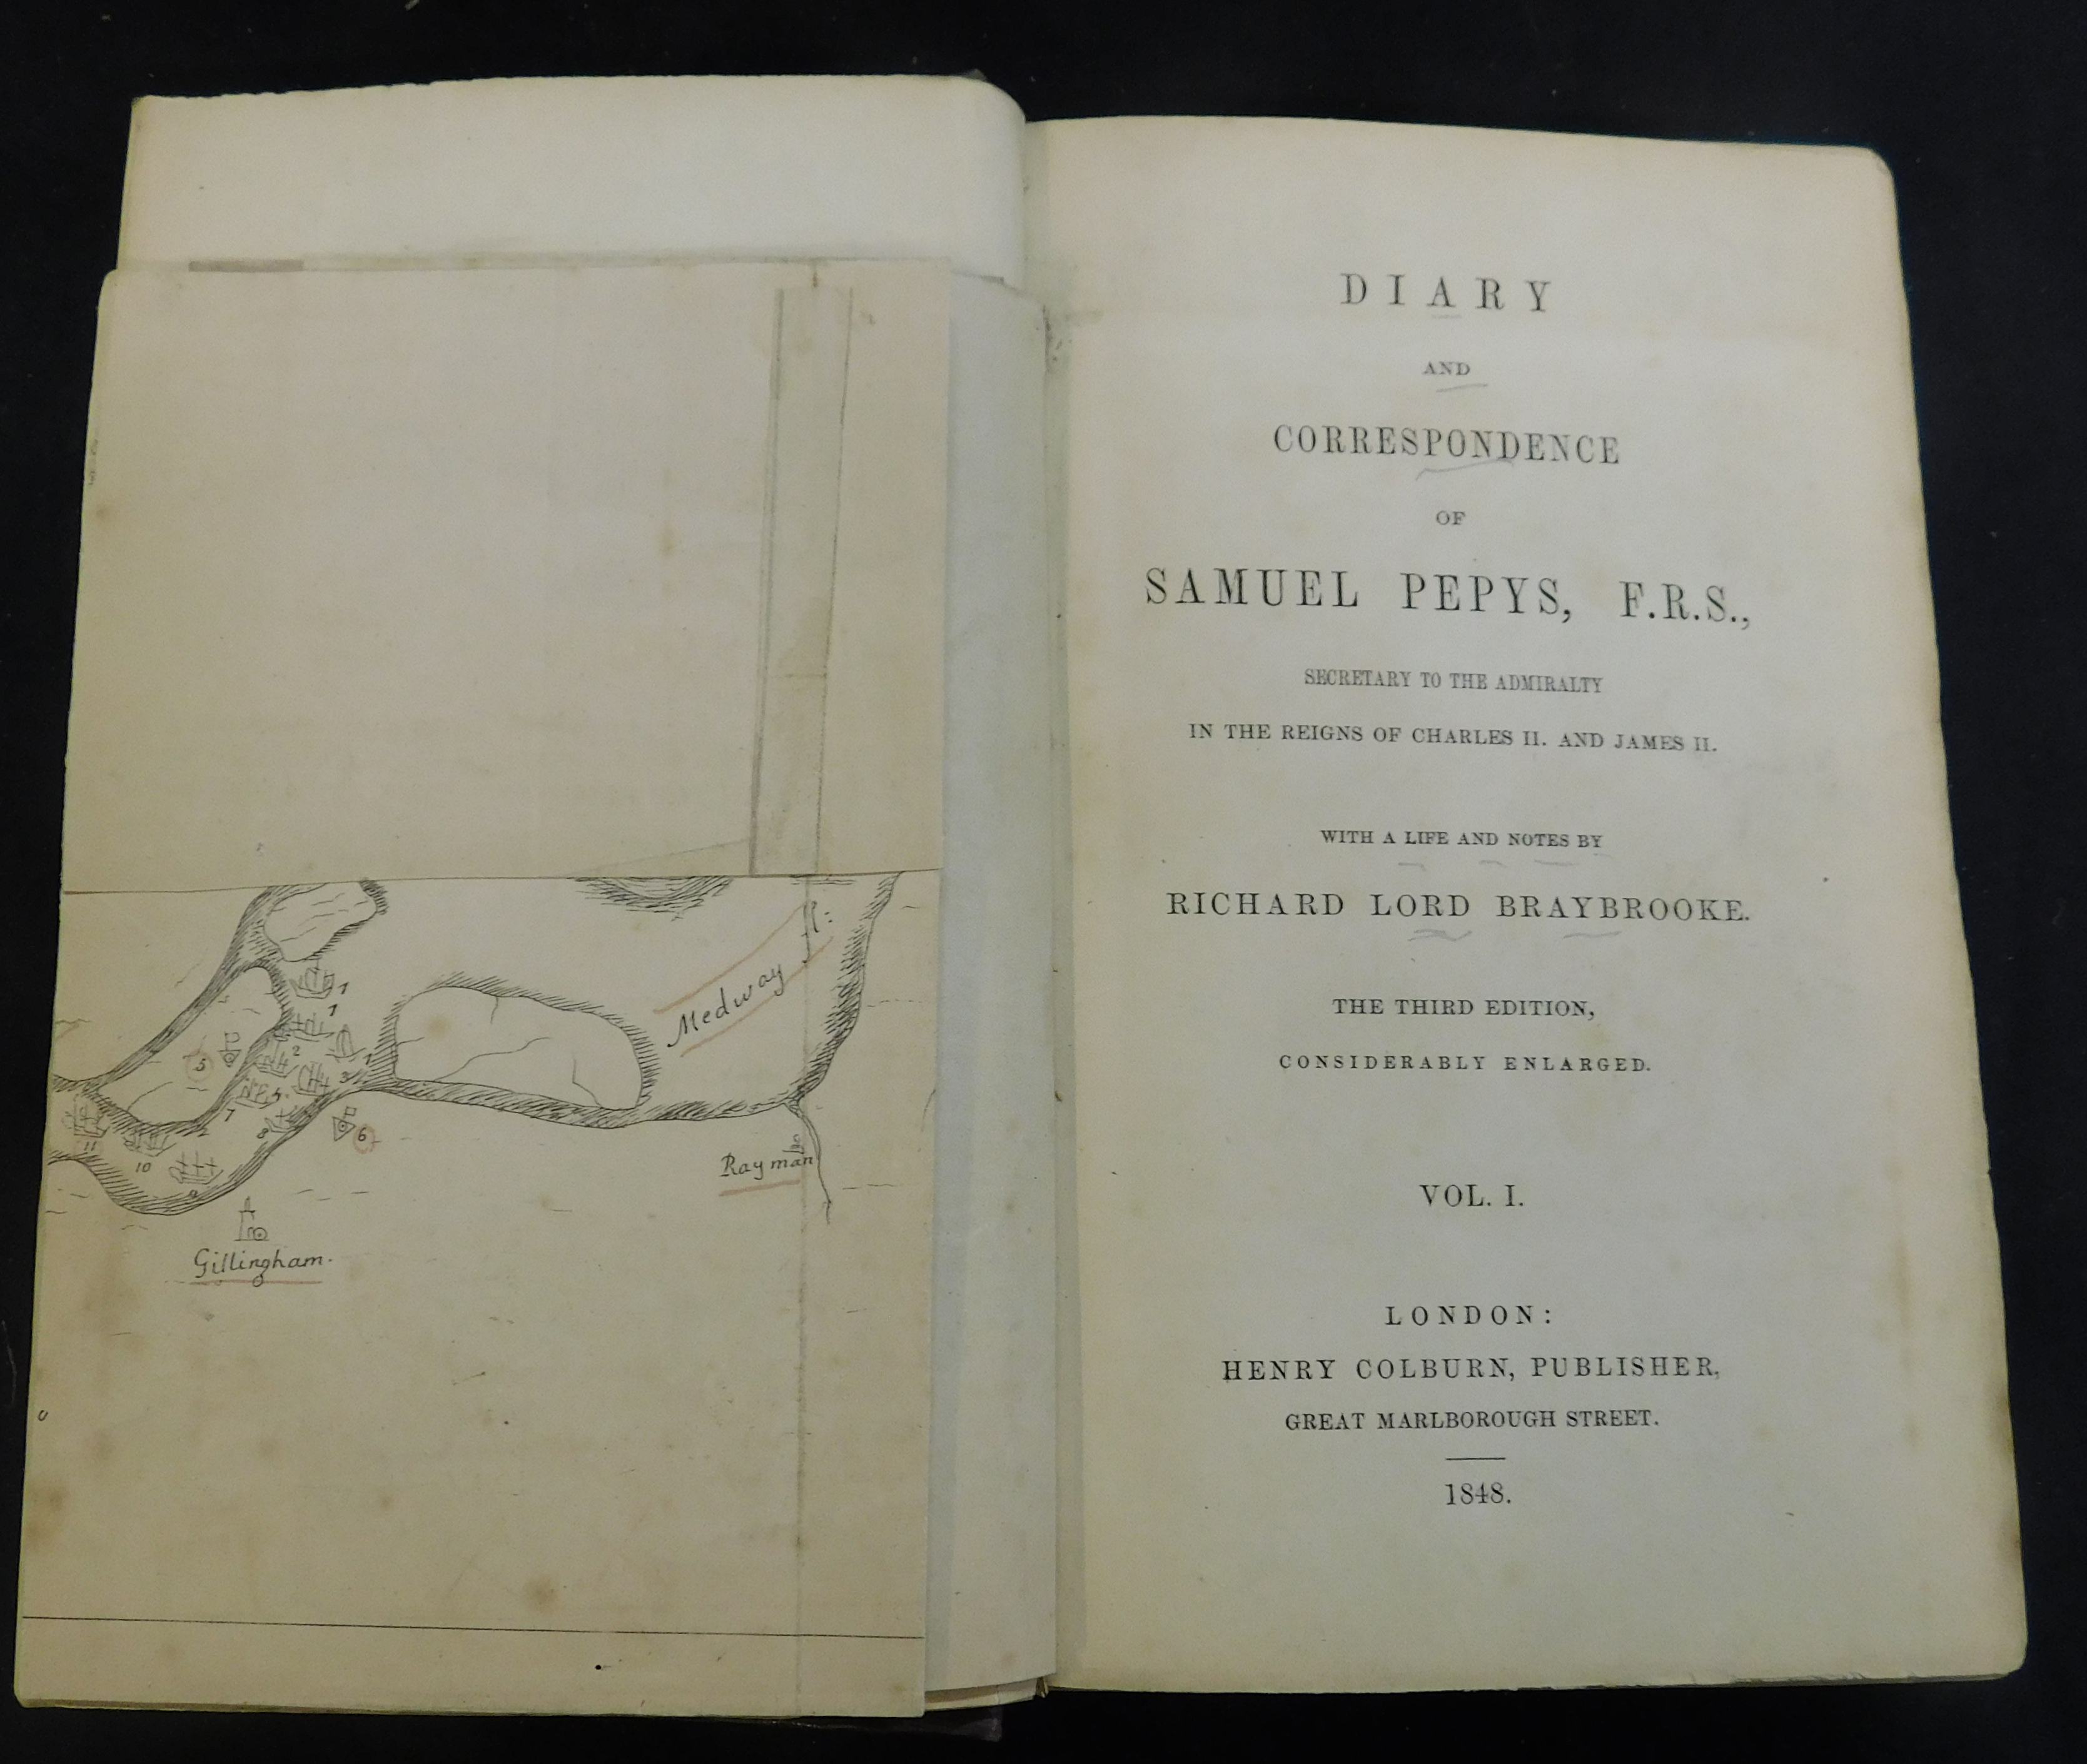 SAMUEL PEPYS: DIARY AND CORRESPONDENCE, ed Richard Lord Braybrooke, London, Henry Colburn, 1848-